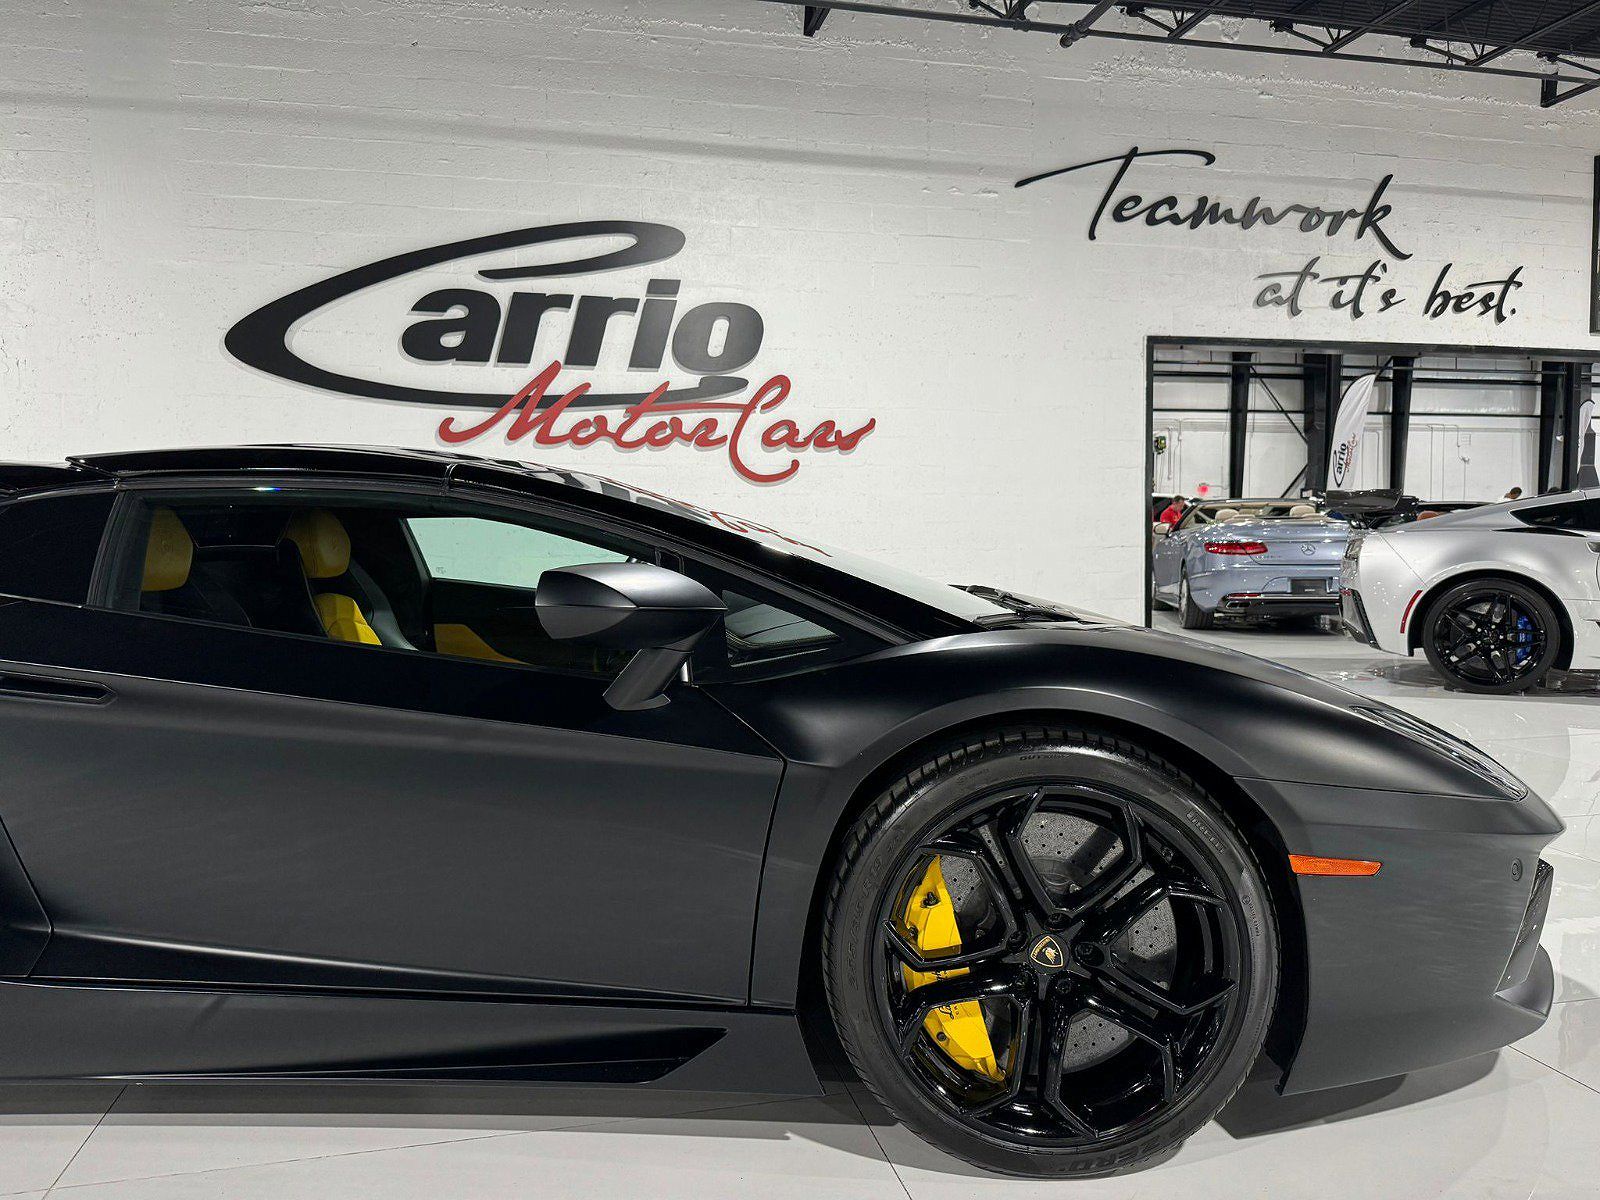 2014 Lamborghini Aventador LP700 image 58